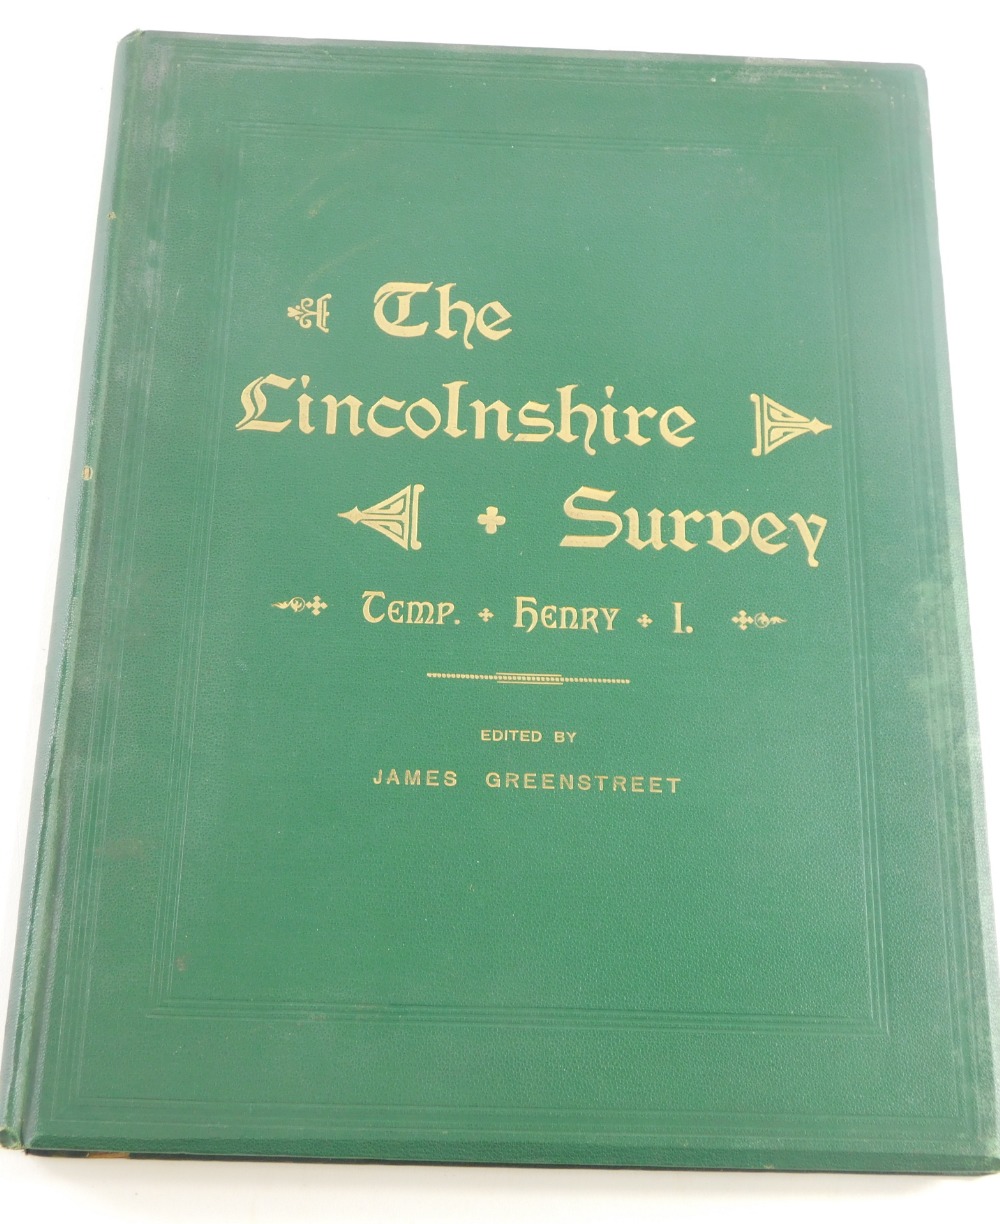 Greenstreet (James, ed.) THE LINCOLNSHIRE SURVEY, publisher's cloth, folio, 1884.